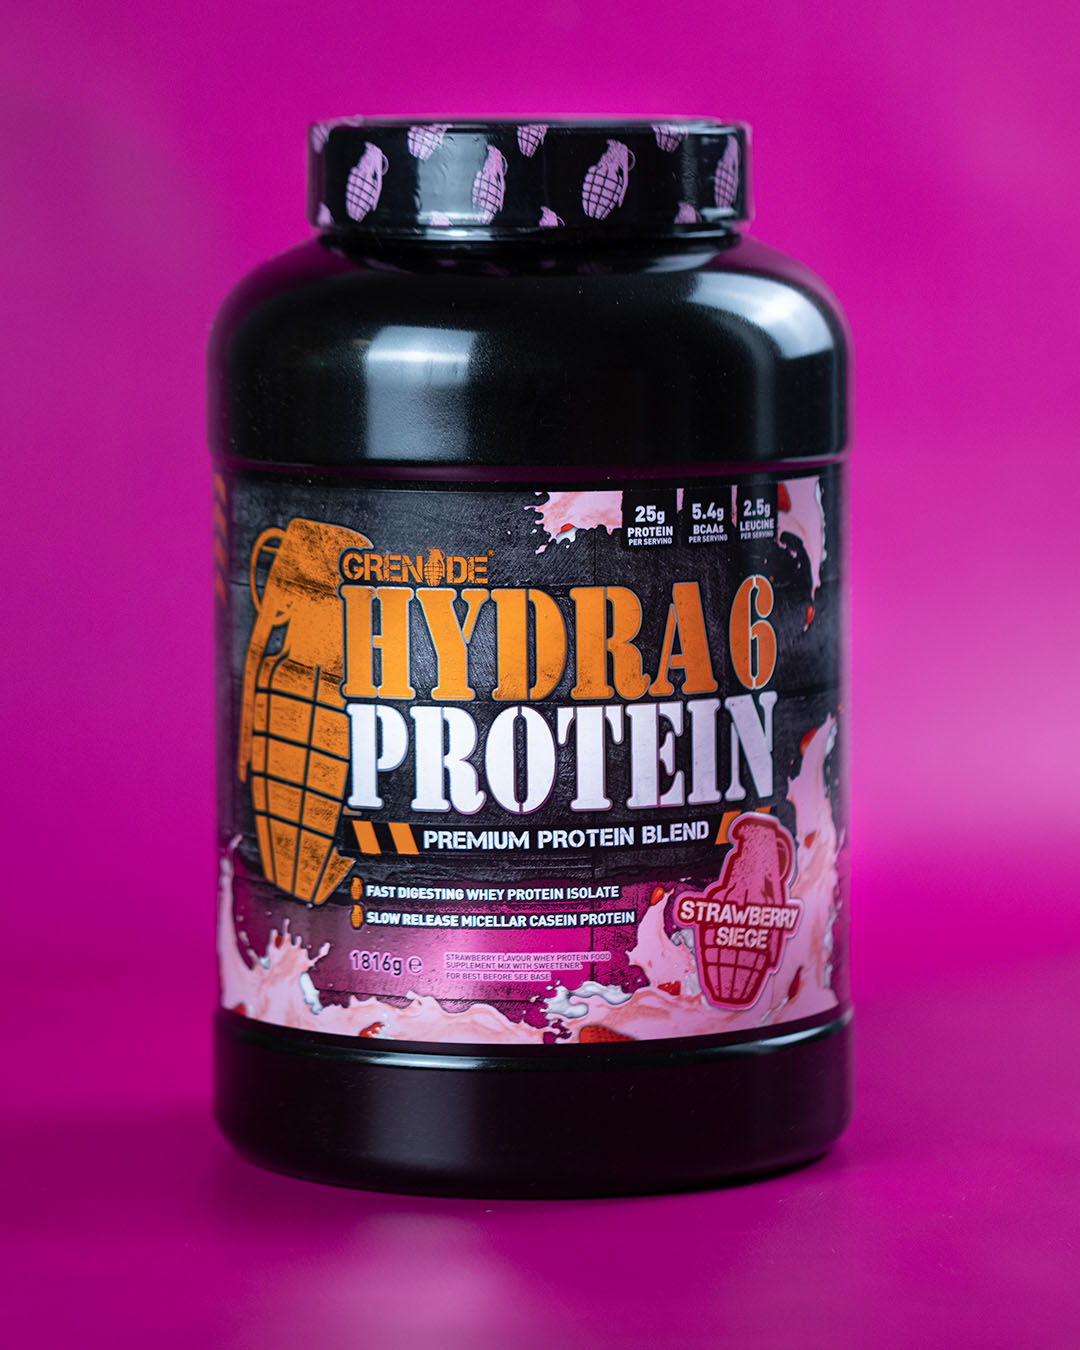 Grenade Hydra 6 Protein Powder - Strawberry Siege 1816g Tub